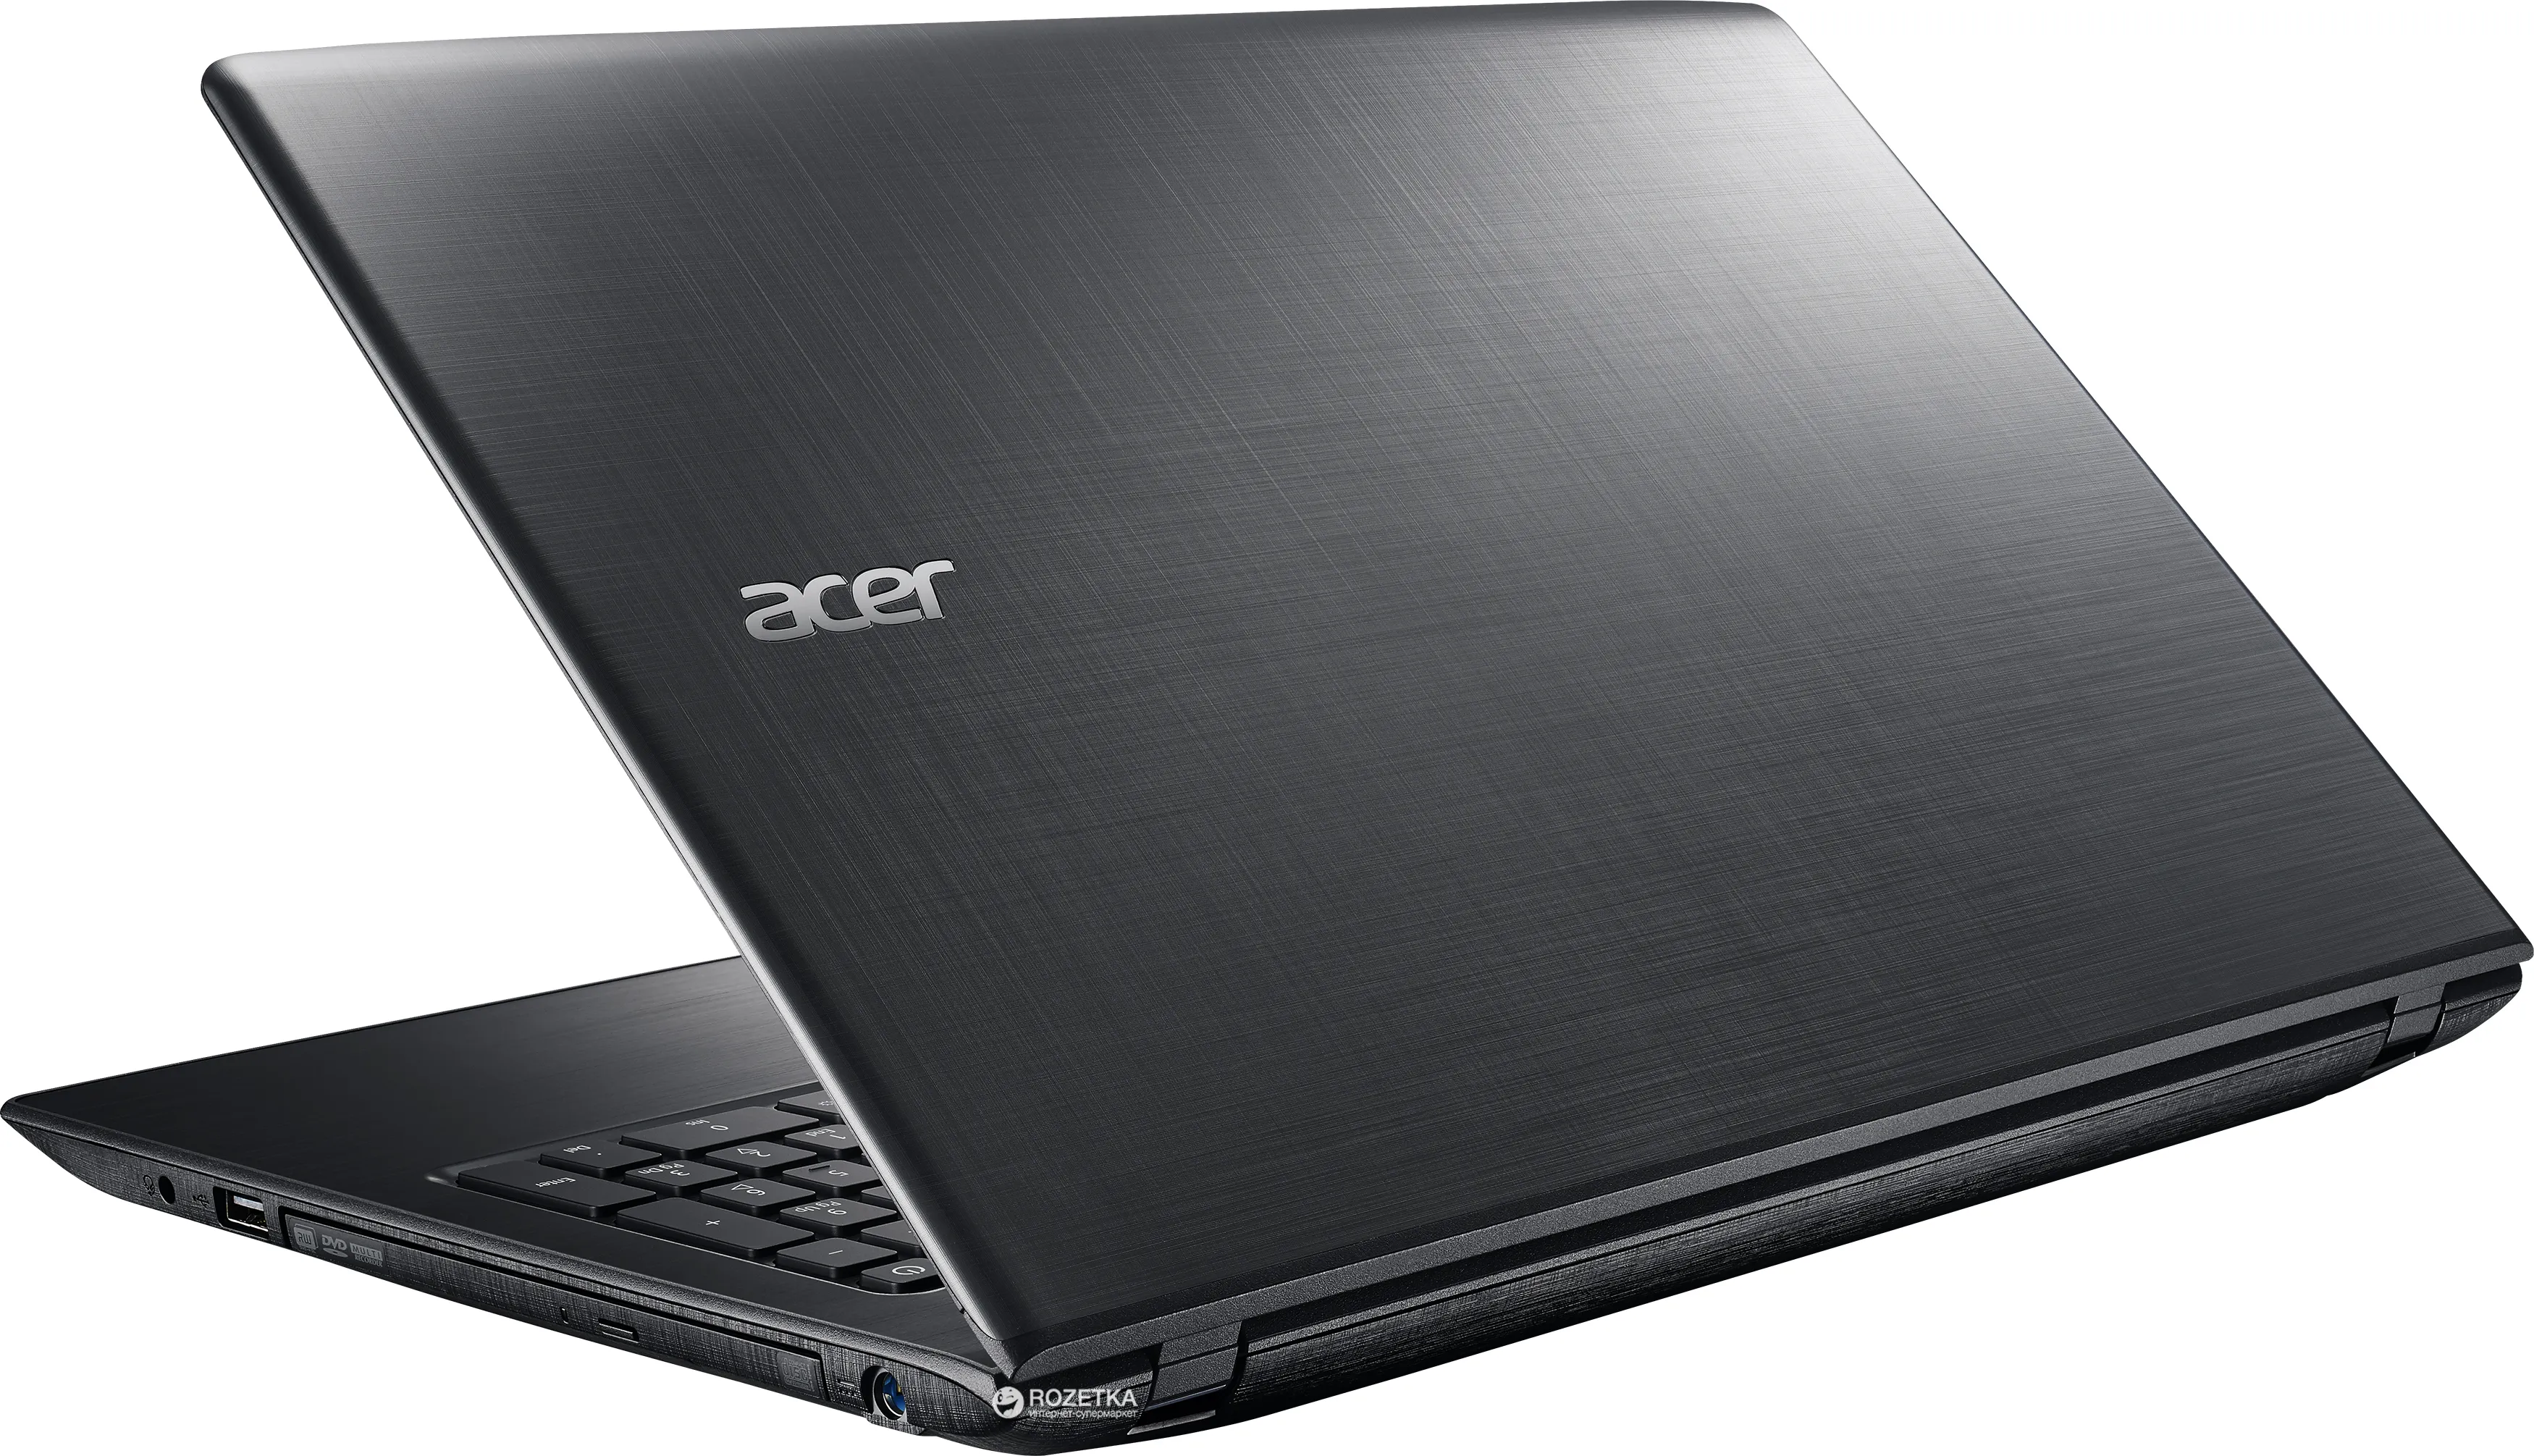 Noutbuk Acer Extensa 15/ Celeron Quad 3160/ DDR3 4 GB/ 500GB HDD /15.6" HD LED/ UMA/ DVD / RUS#2